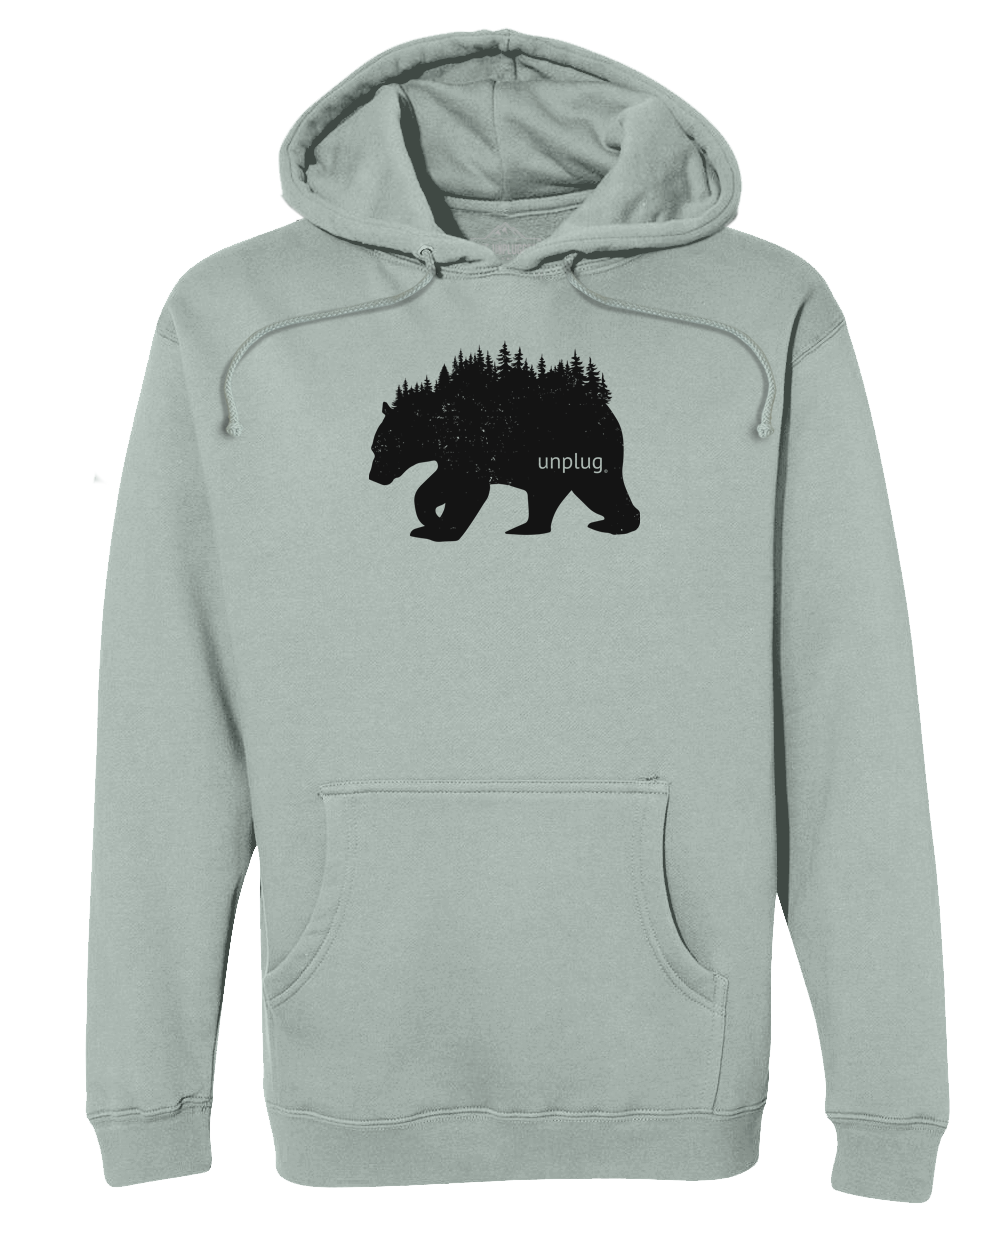 BEAR IN THE TREES Premium Heavyweight Hooded Sweatshirt